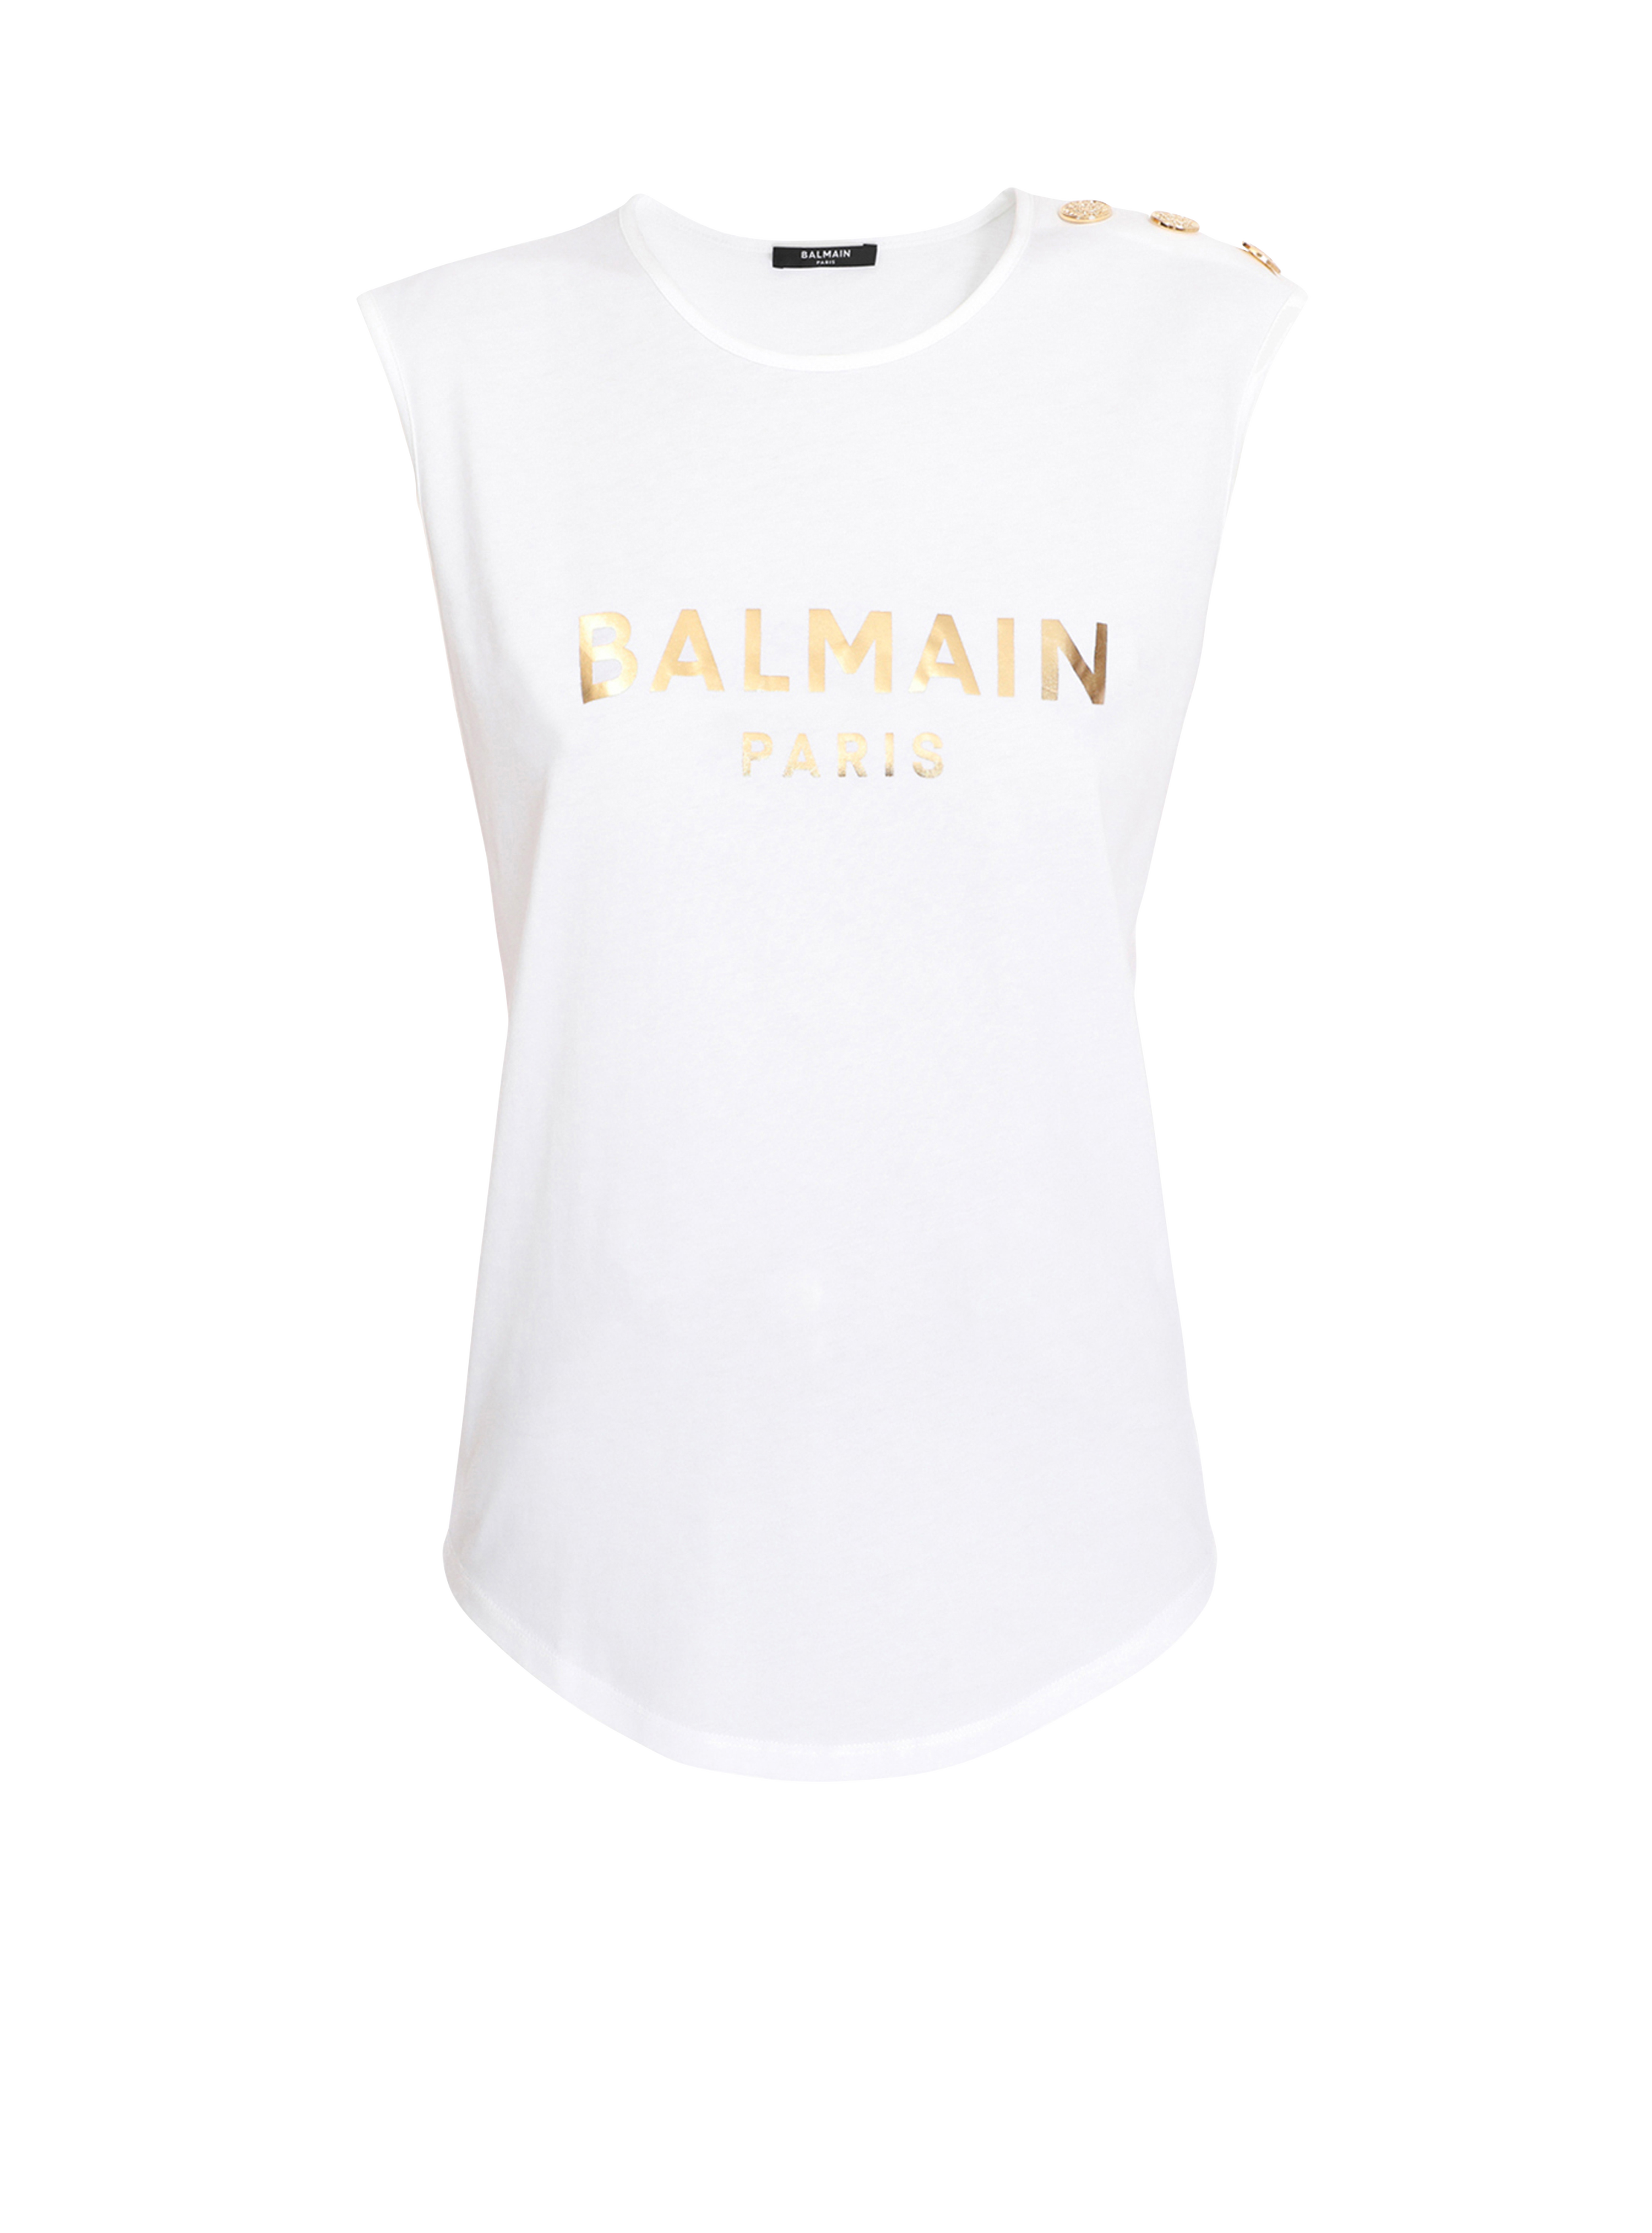 Camiseta de algodón con logotipo de Balmain estampado, blanco